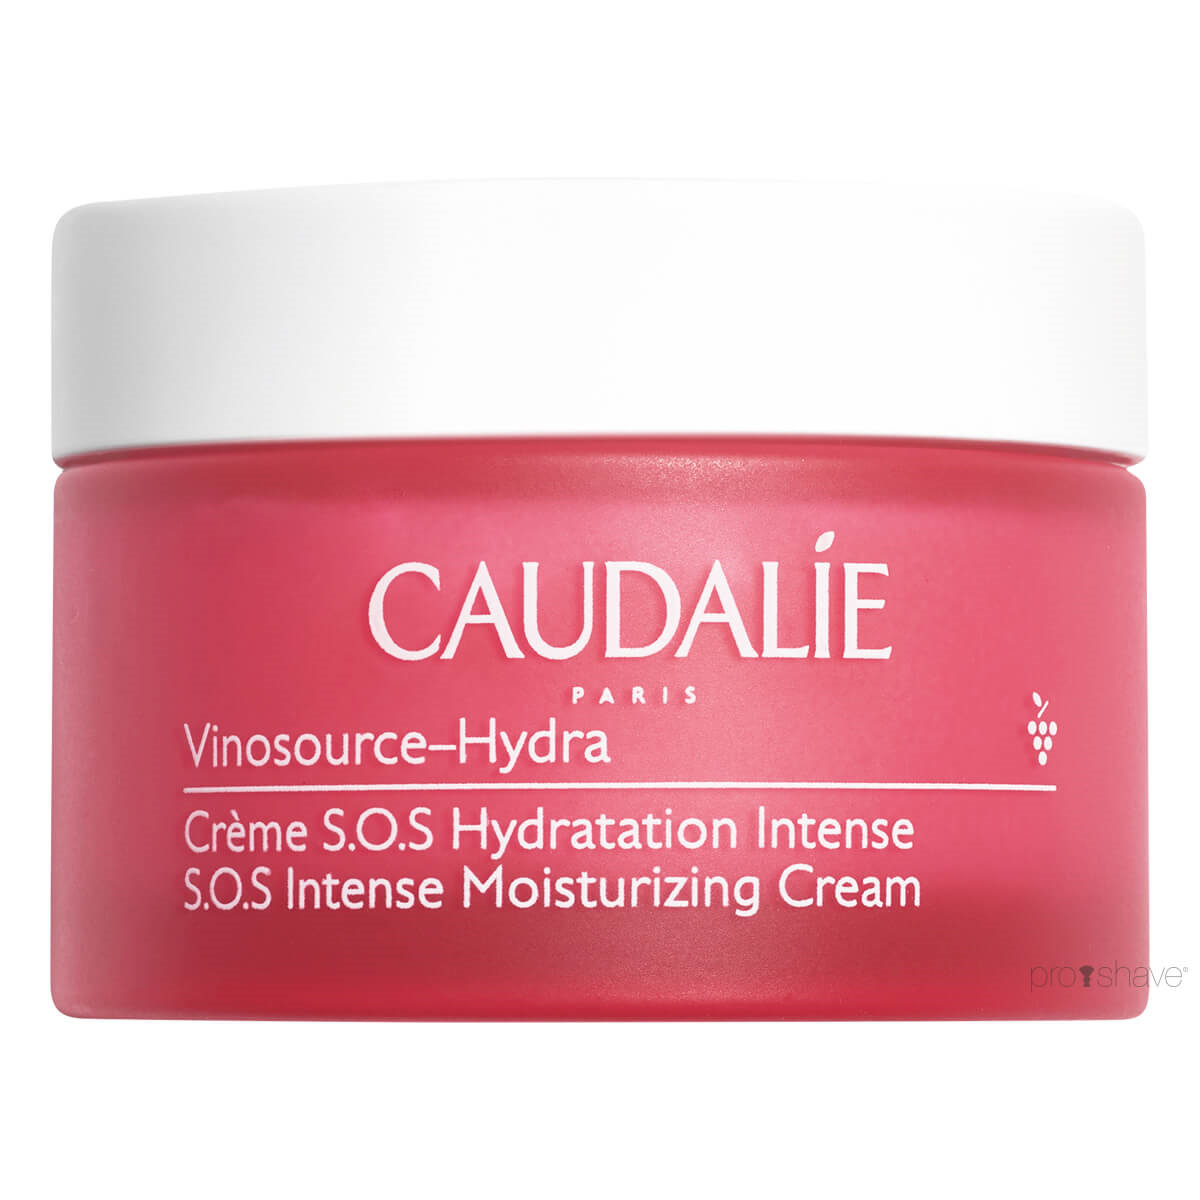 Caudalie Vinosource-Hydra, SOS Intense Moisturizing Cream, 50 ml.